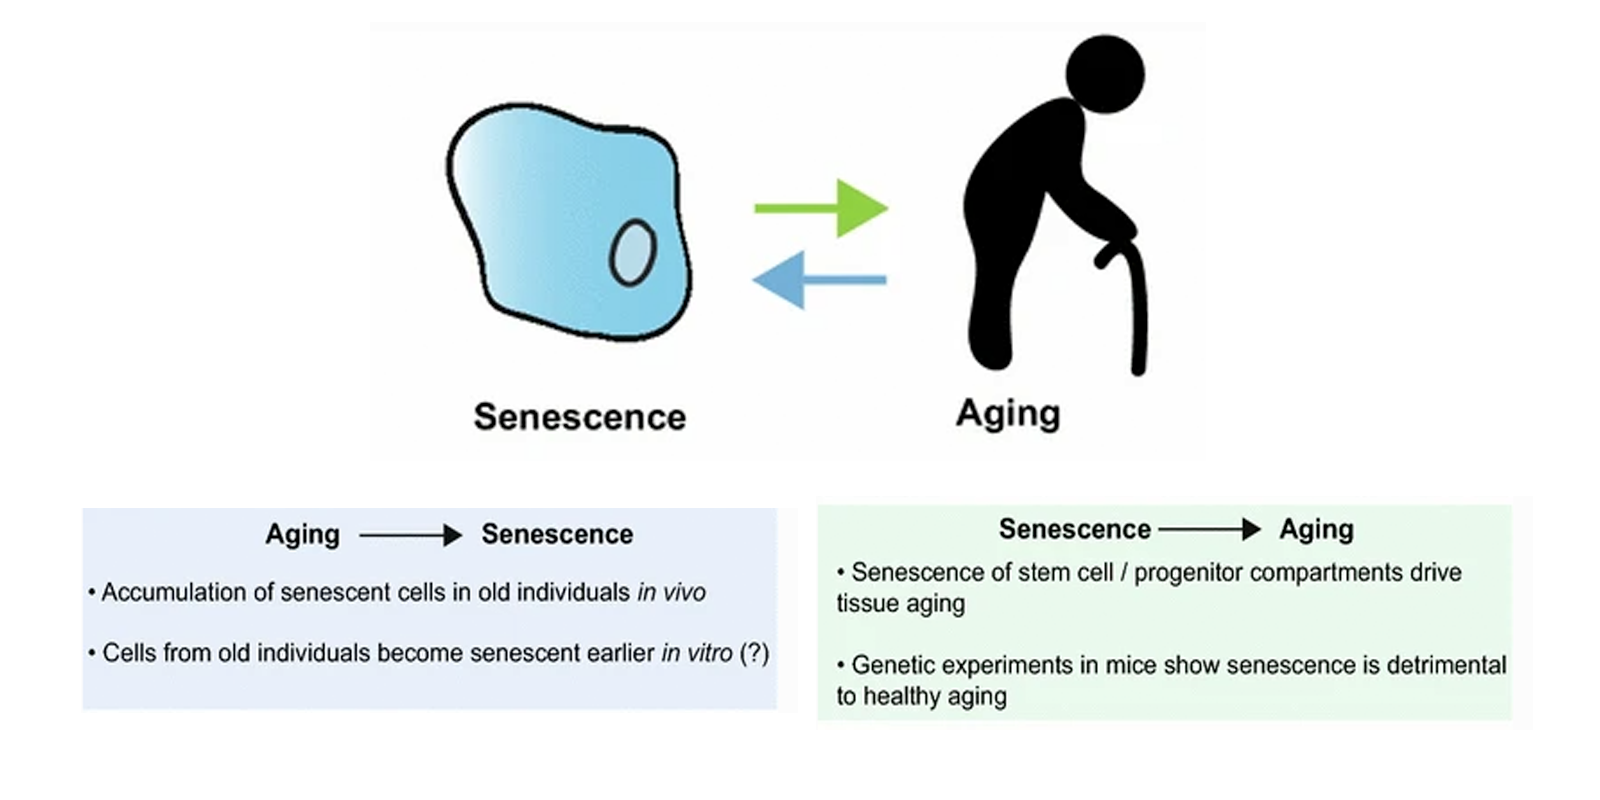 20-CEP-15480-senescence-aging-4